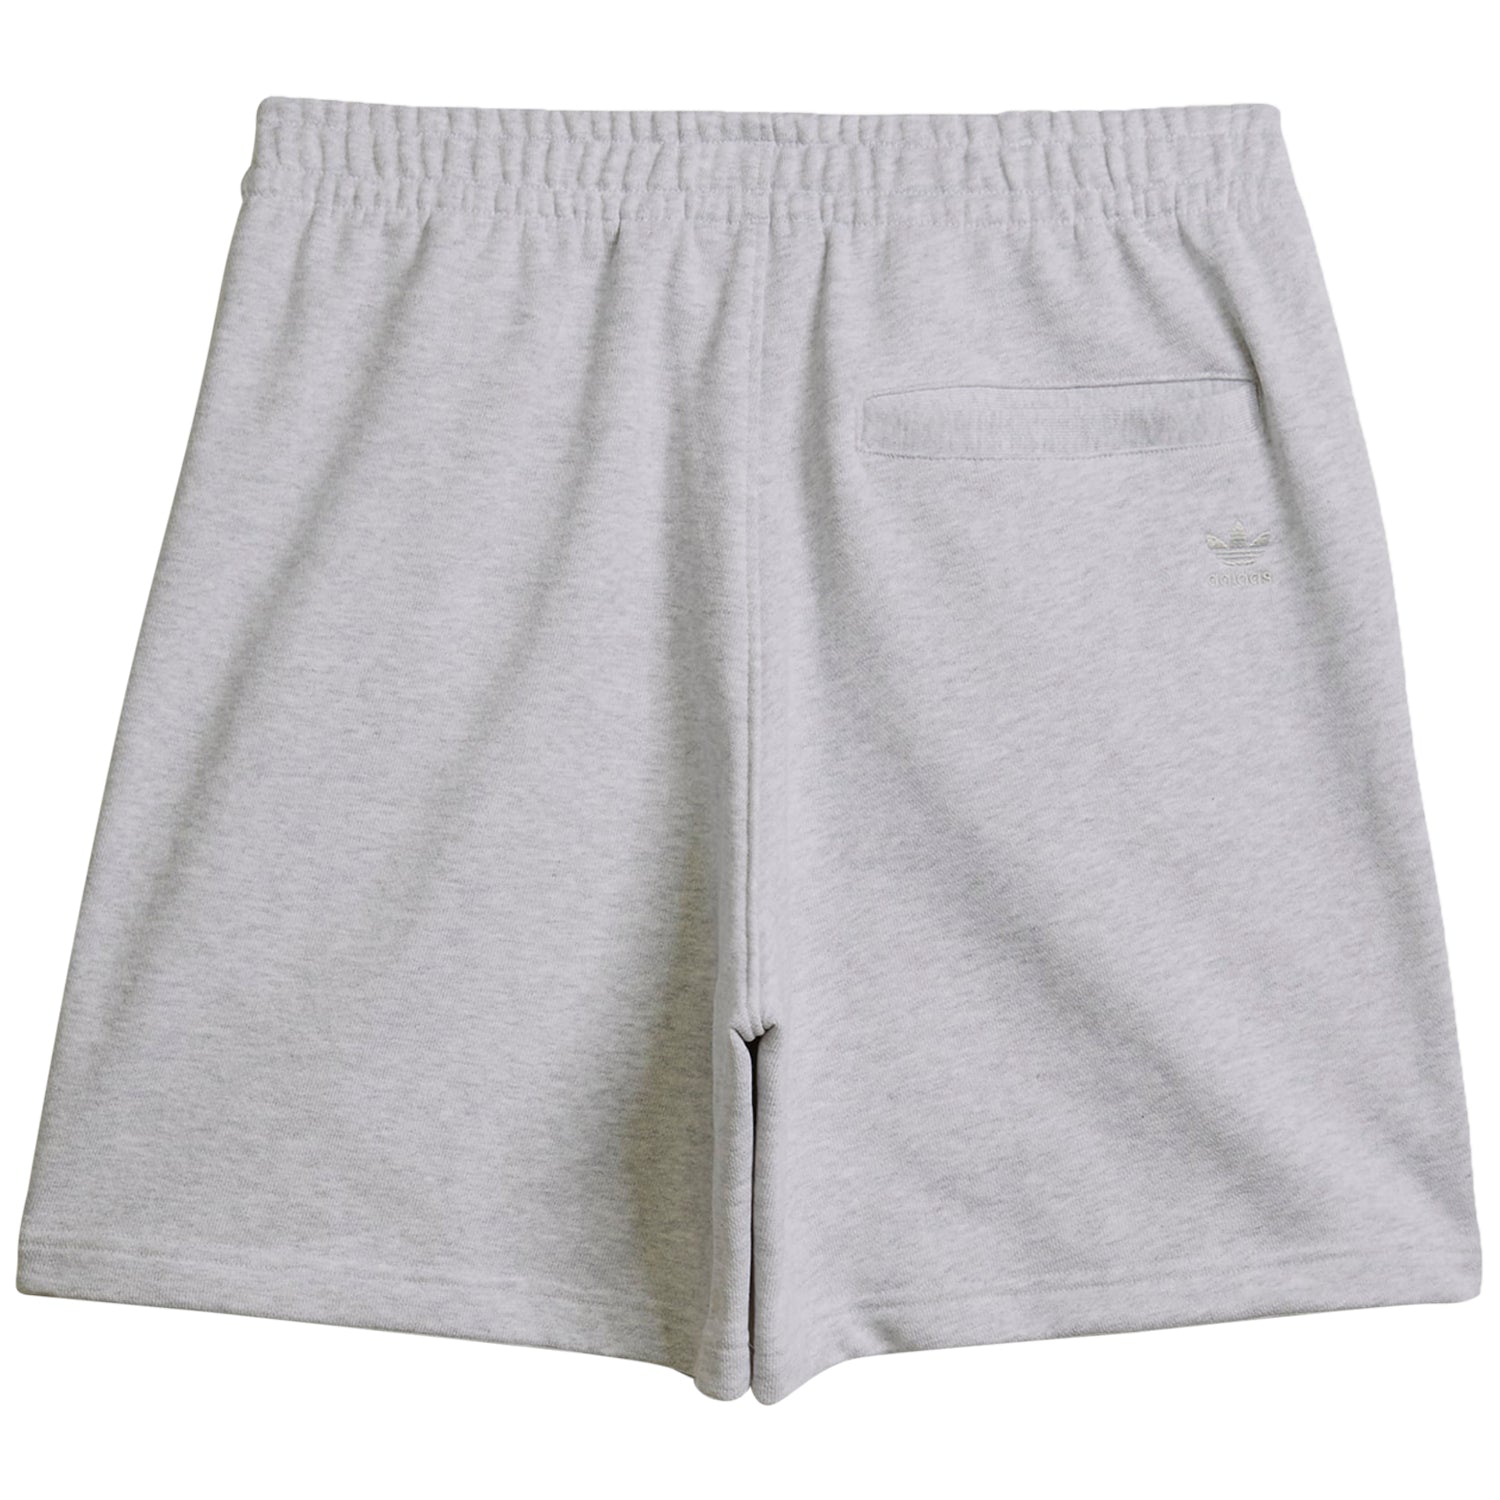 Adidas Pharrell Williams Basics Shorts Mens Style : H58282